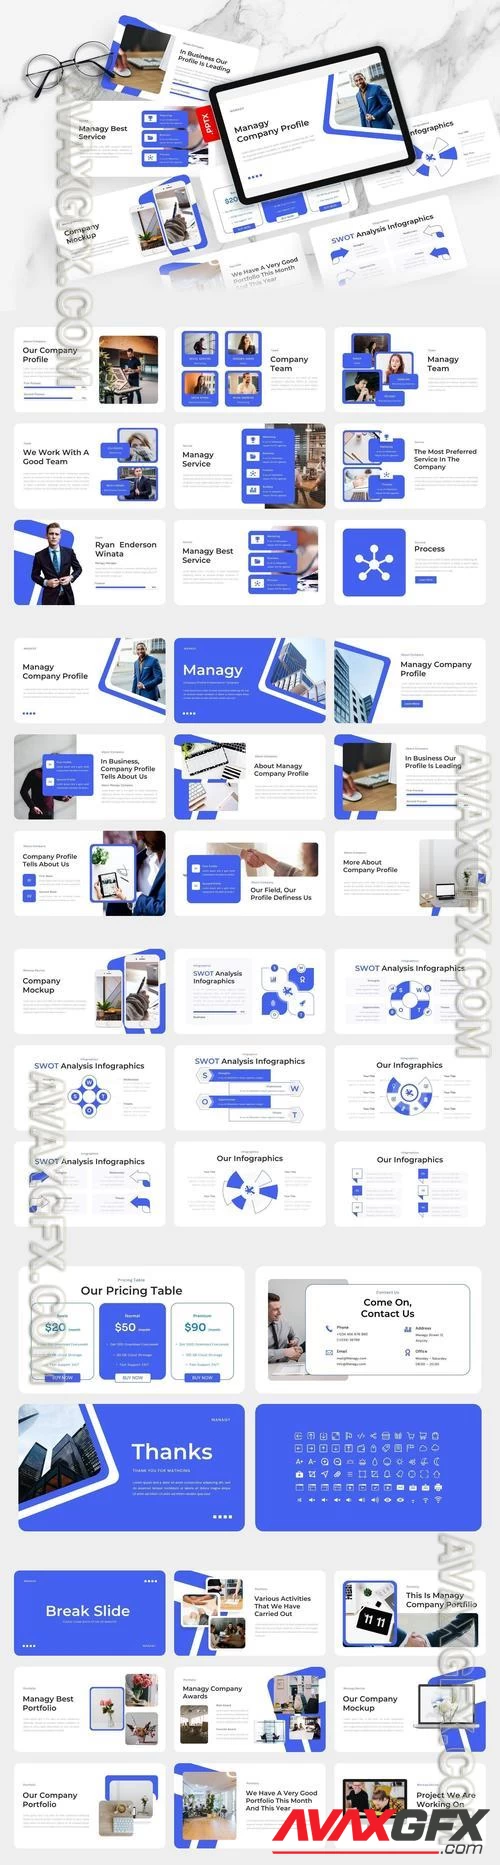 Managy - Company Profile PowerPoint Template